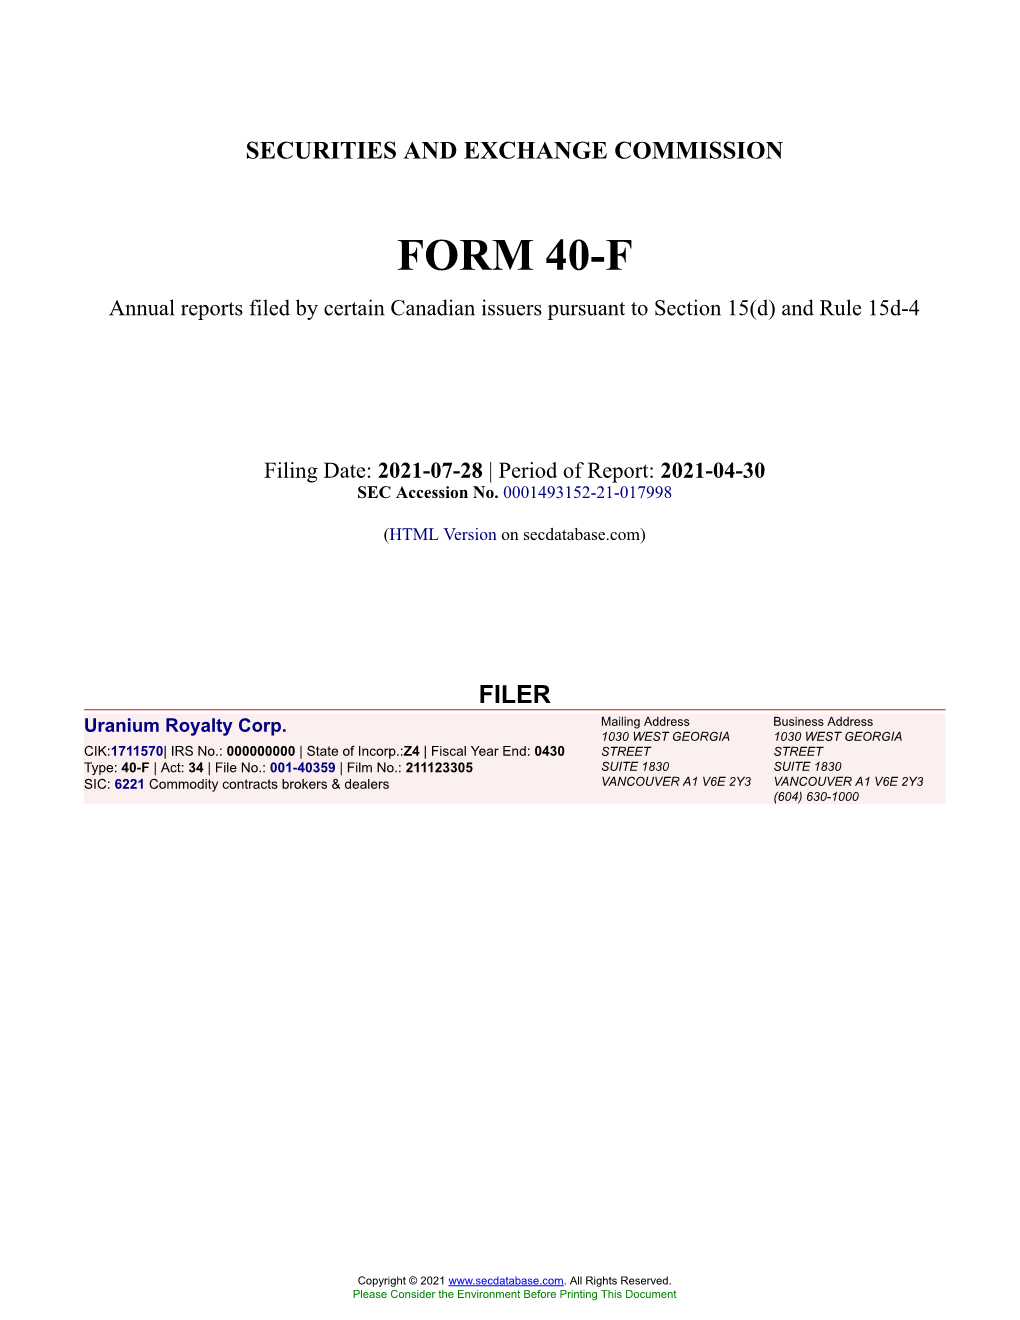 Uranium Royalty Corp. Form 40-F Filed 2021-07-28